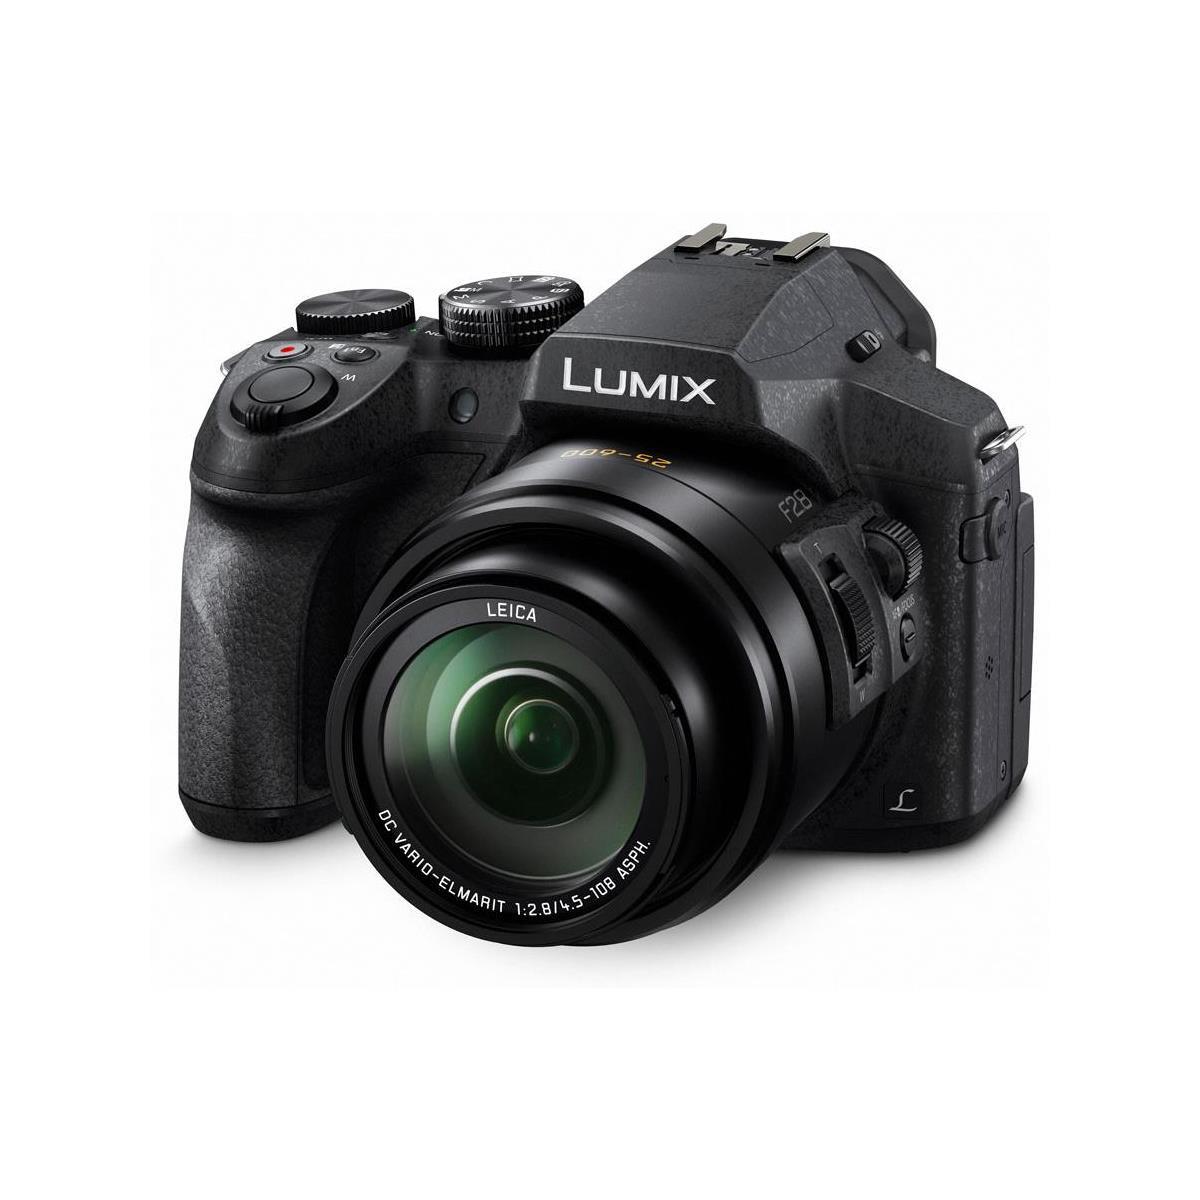 Image of Panasonic Lumix DMC-FZ300 Digital Camera